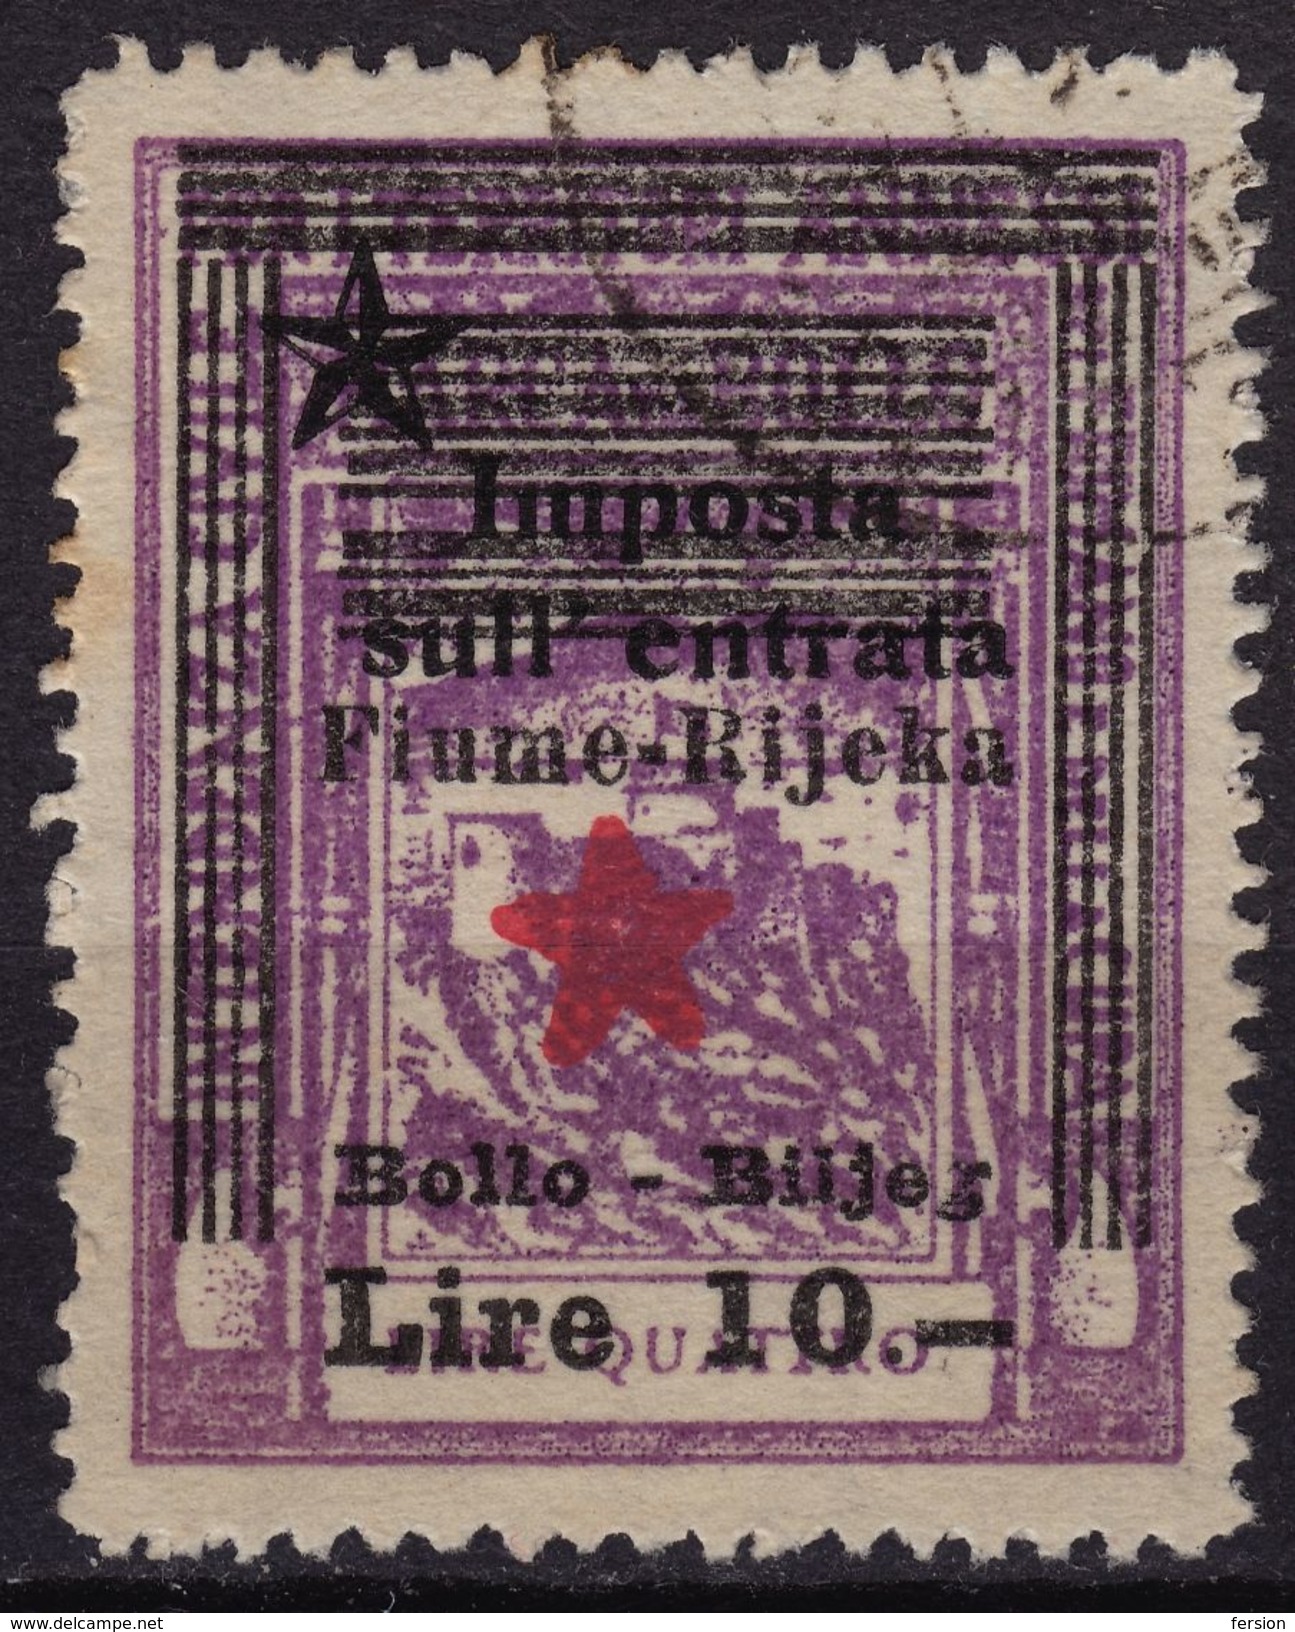 1945 - Istria Istra / Rijeka Fiume CROATIA - Yugoslavia Italy Occupation - Revenue Tax Stamp - Overprint - Occup. Iugoslava: Istria